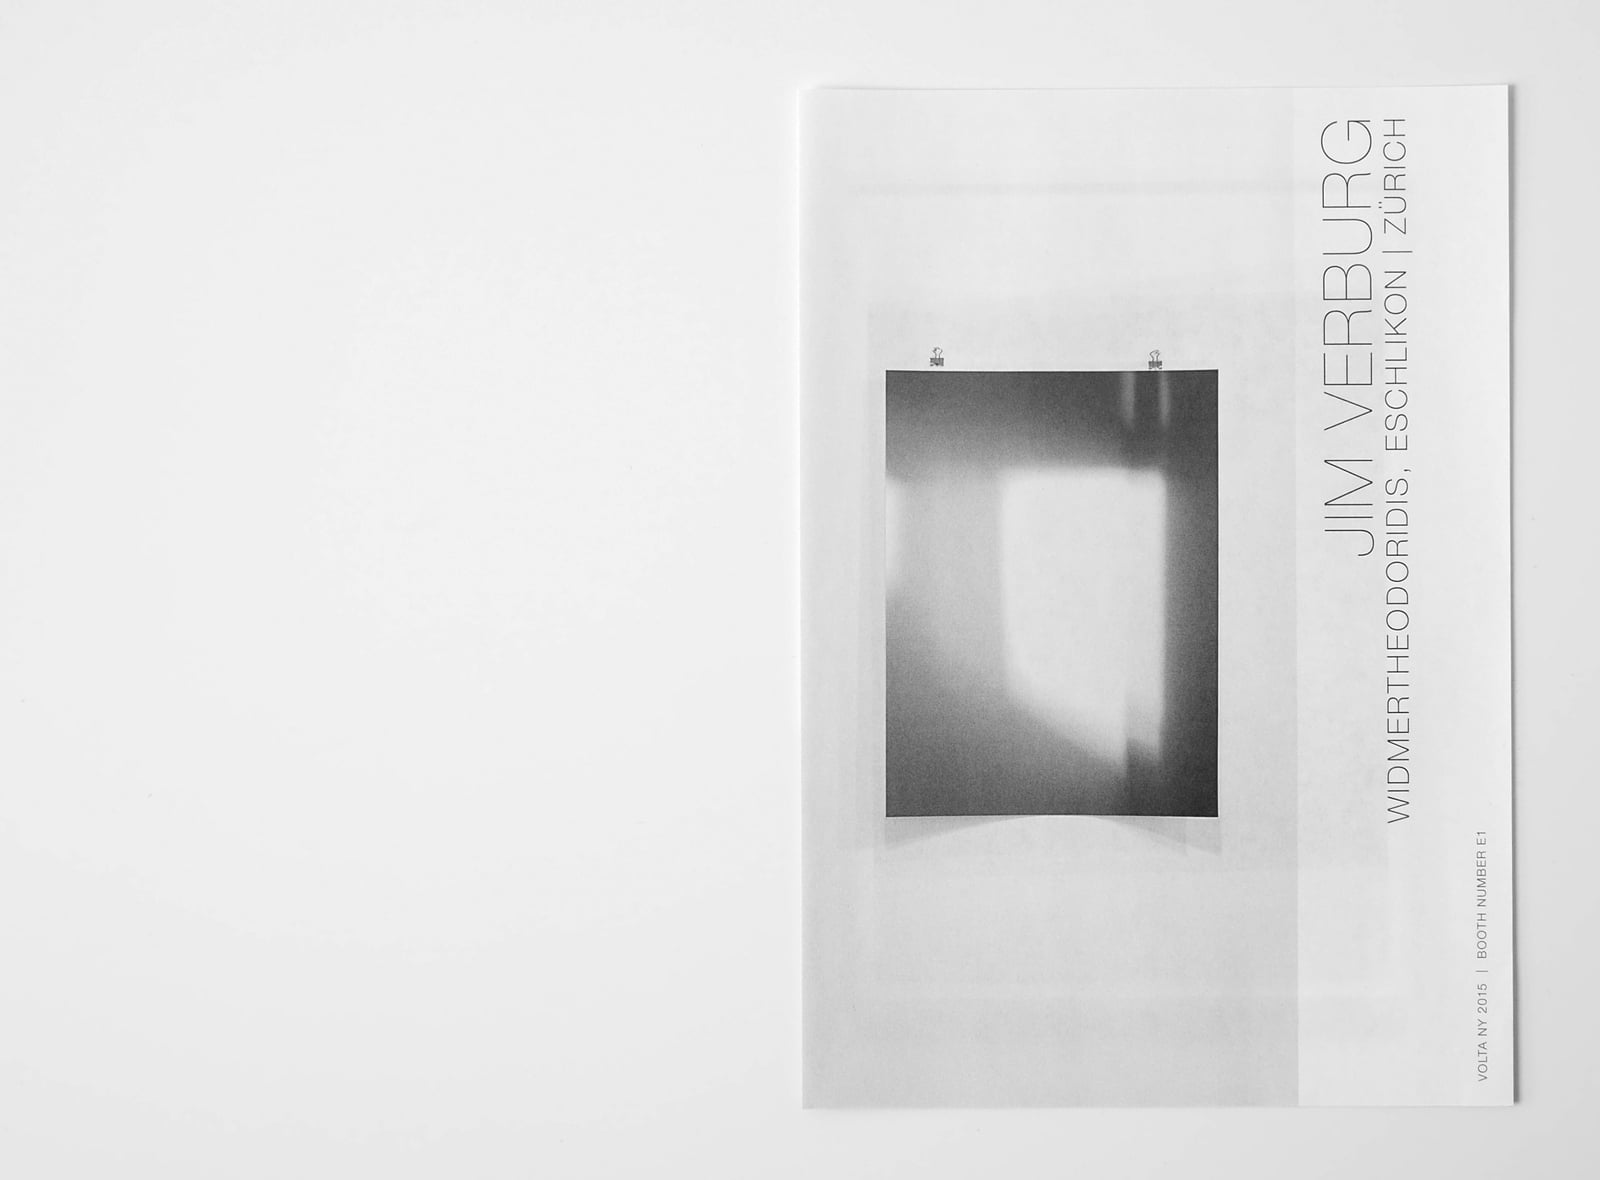  print material,&nbsp;widmertheodoridis (Zurich), at VOLTA NY, New York City, 2015 